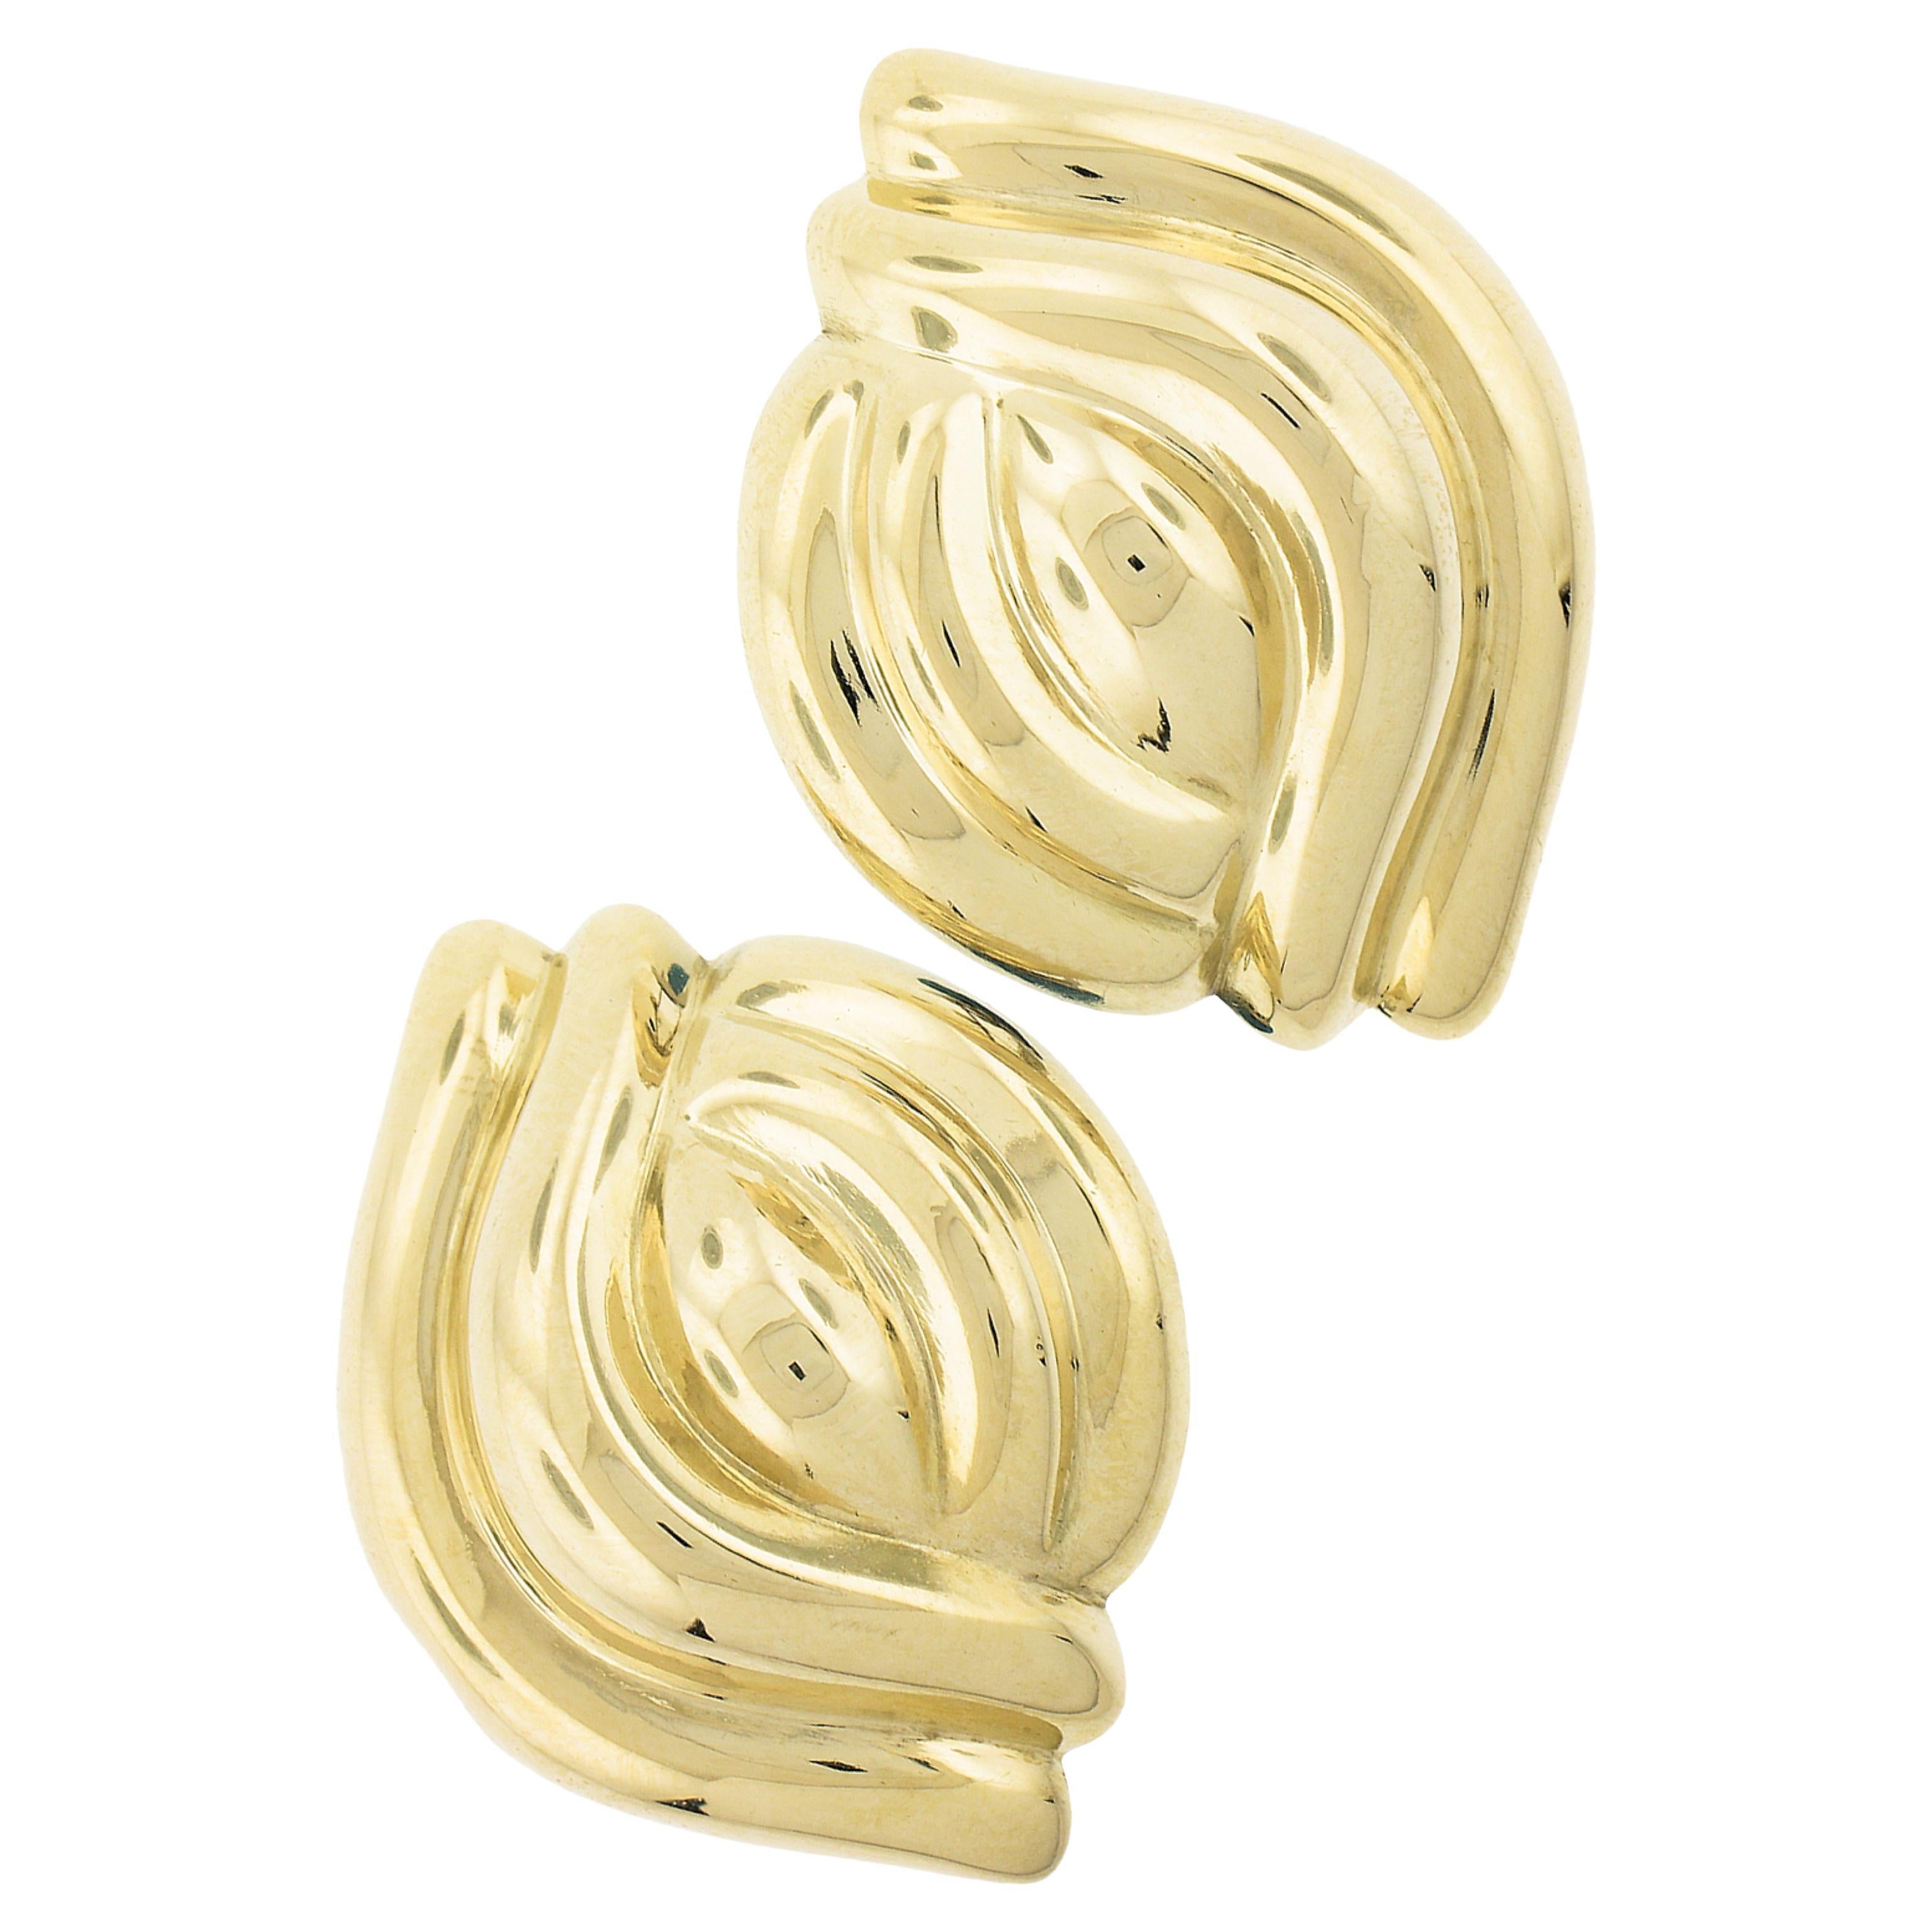 Tiffany & Co. 18K TT Gold Puffed Polished Finish Puffed Design Omega Earrings